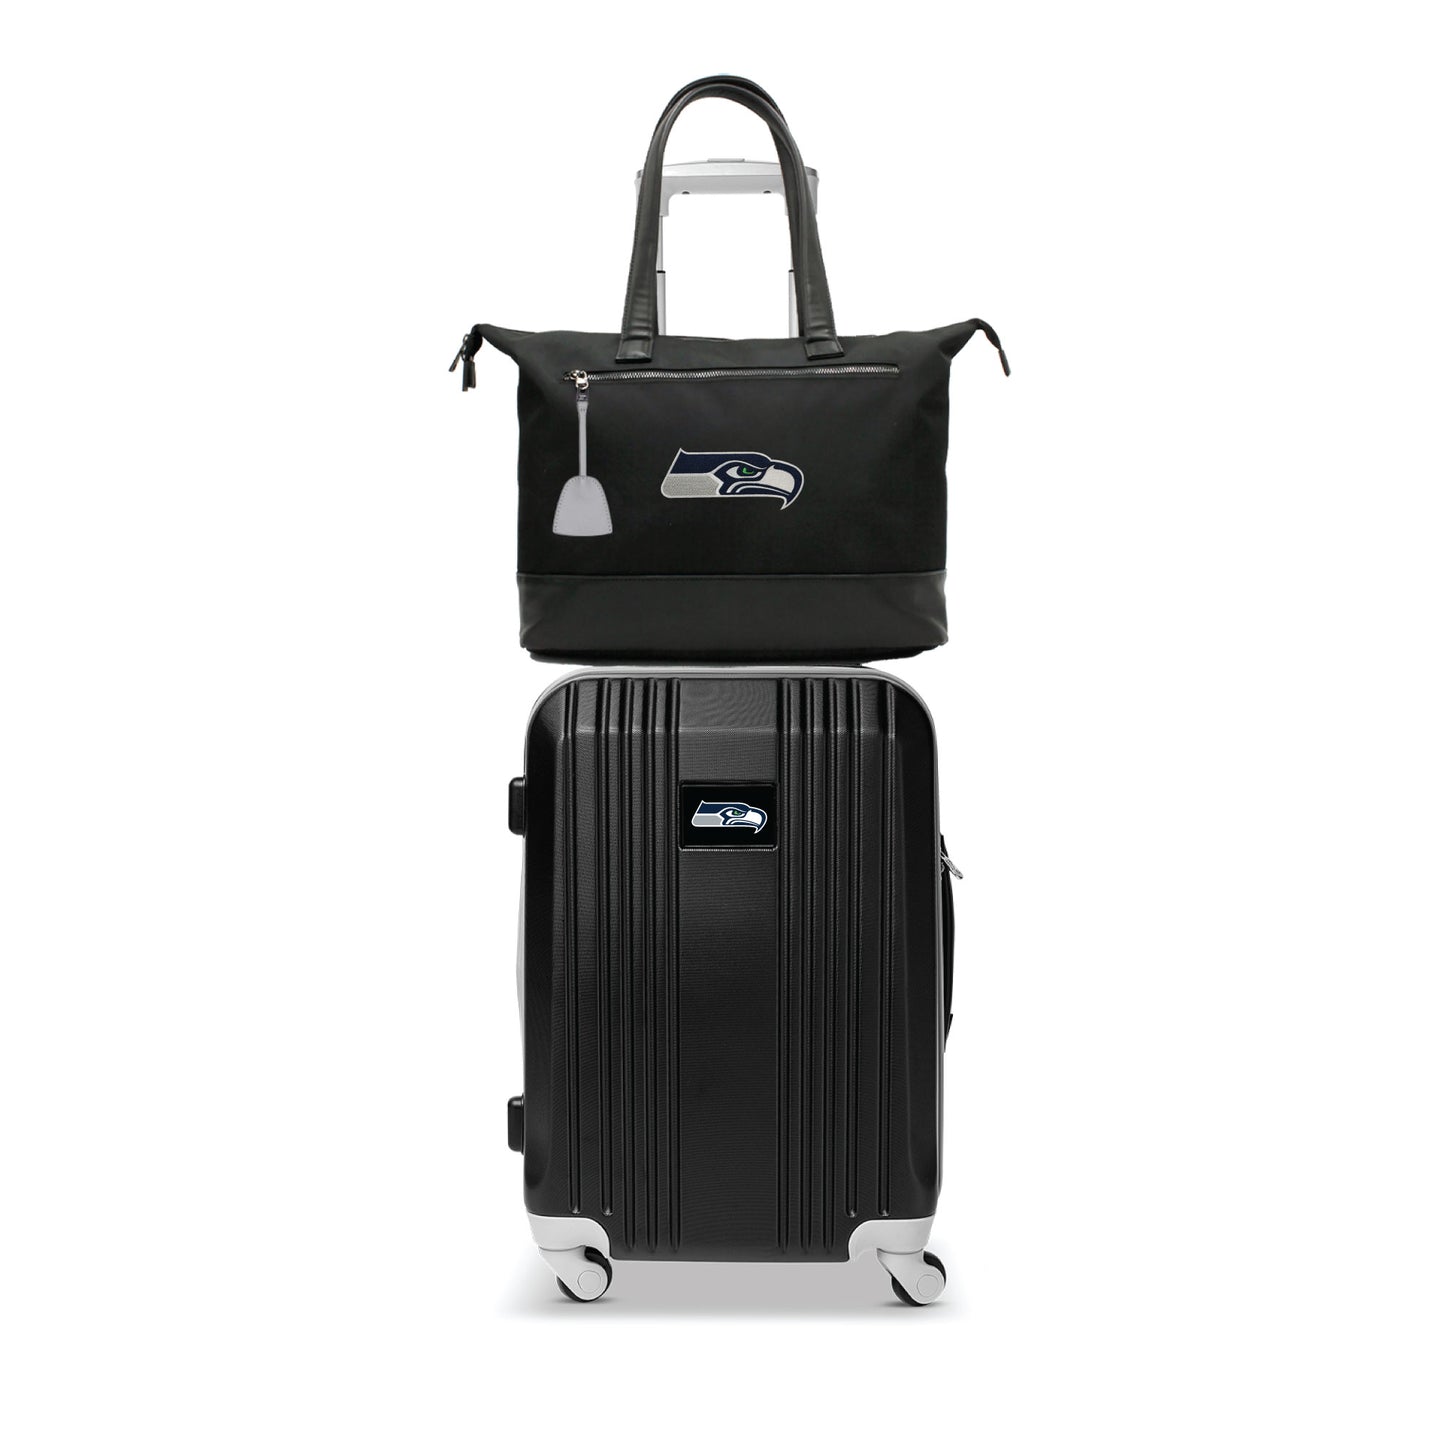 Seattle Seahawks Premium Laptop Tote Bag and Luggage Set